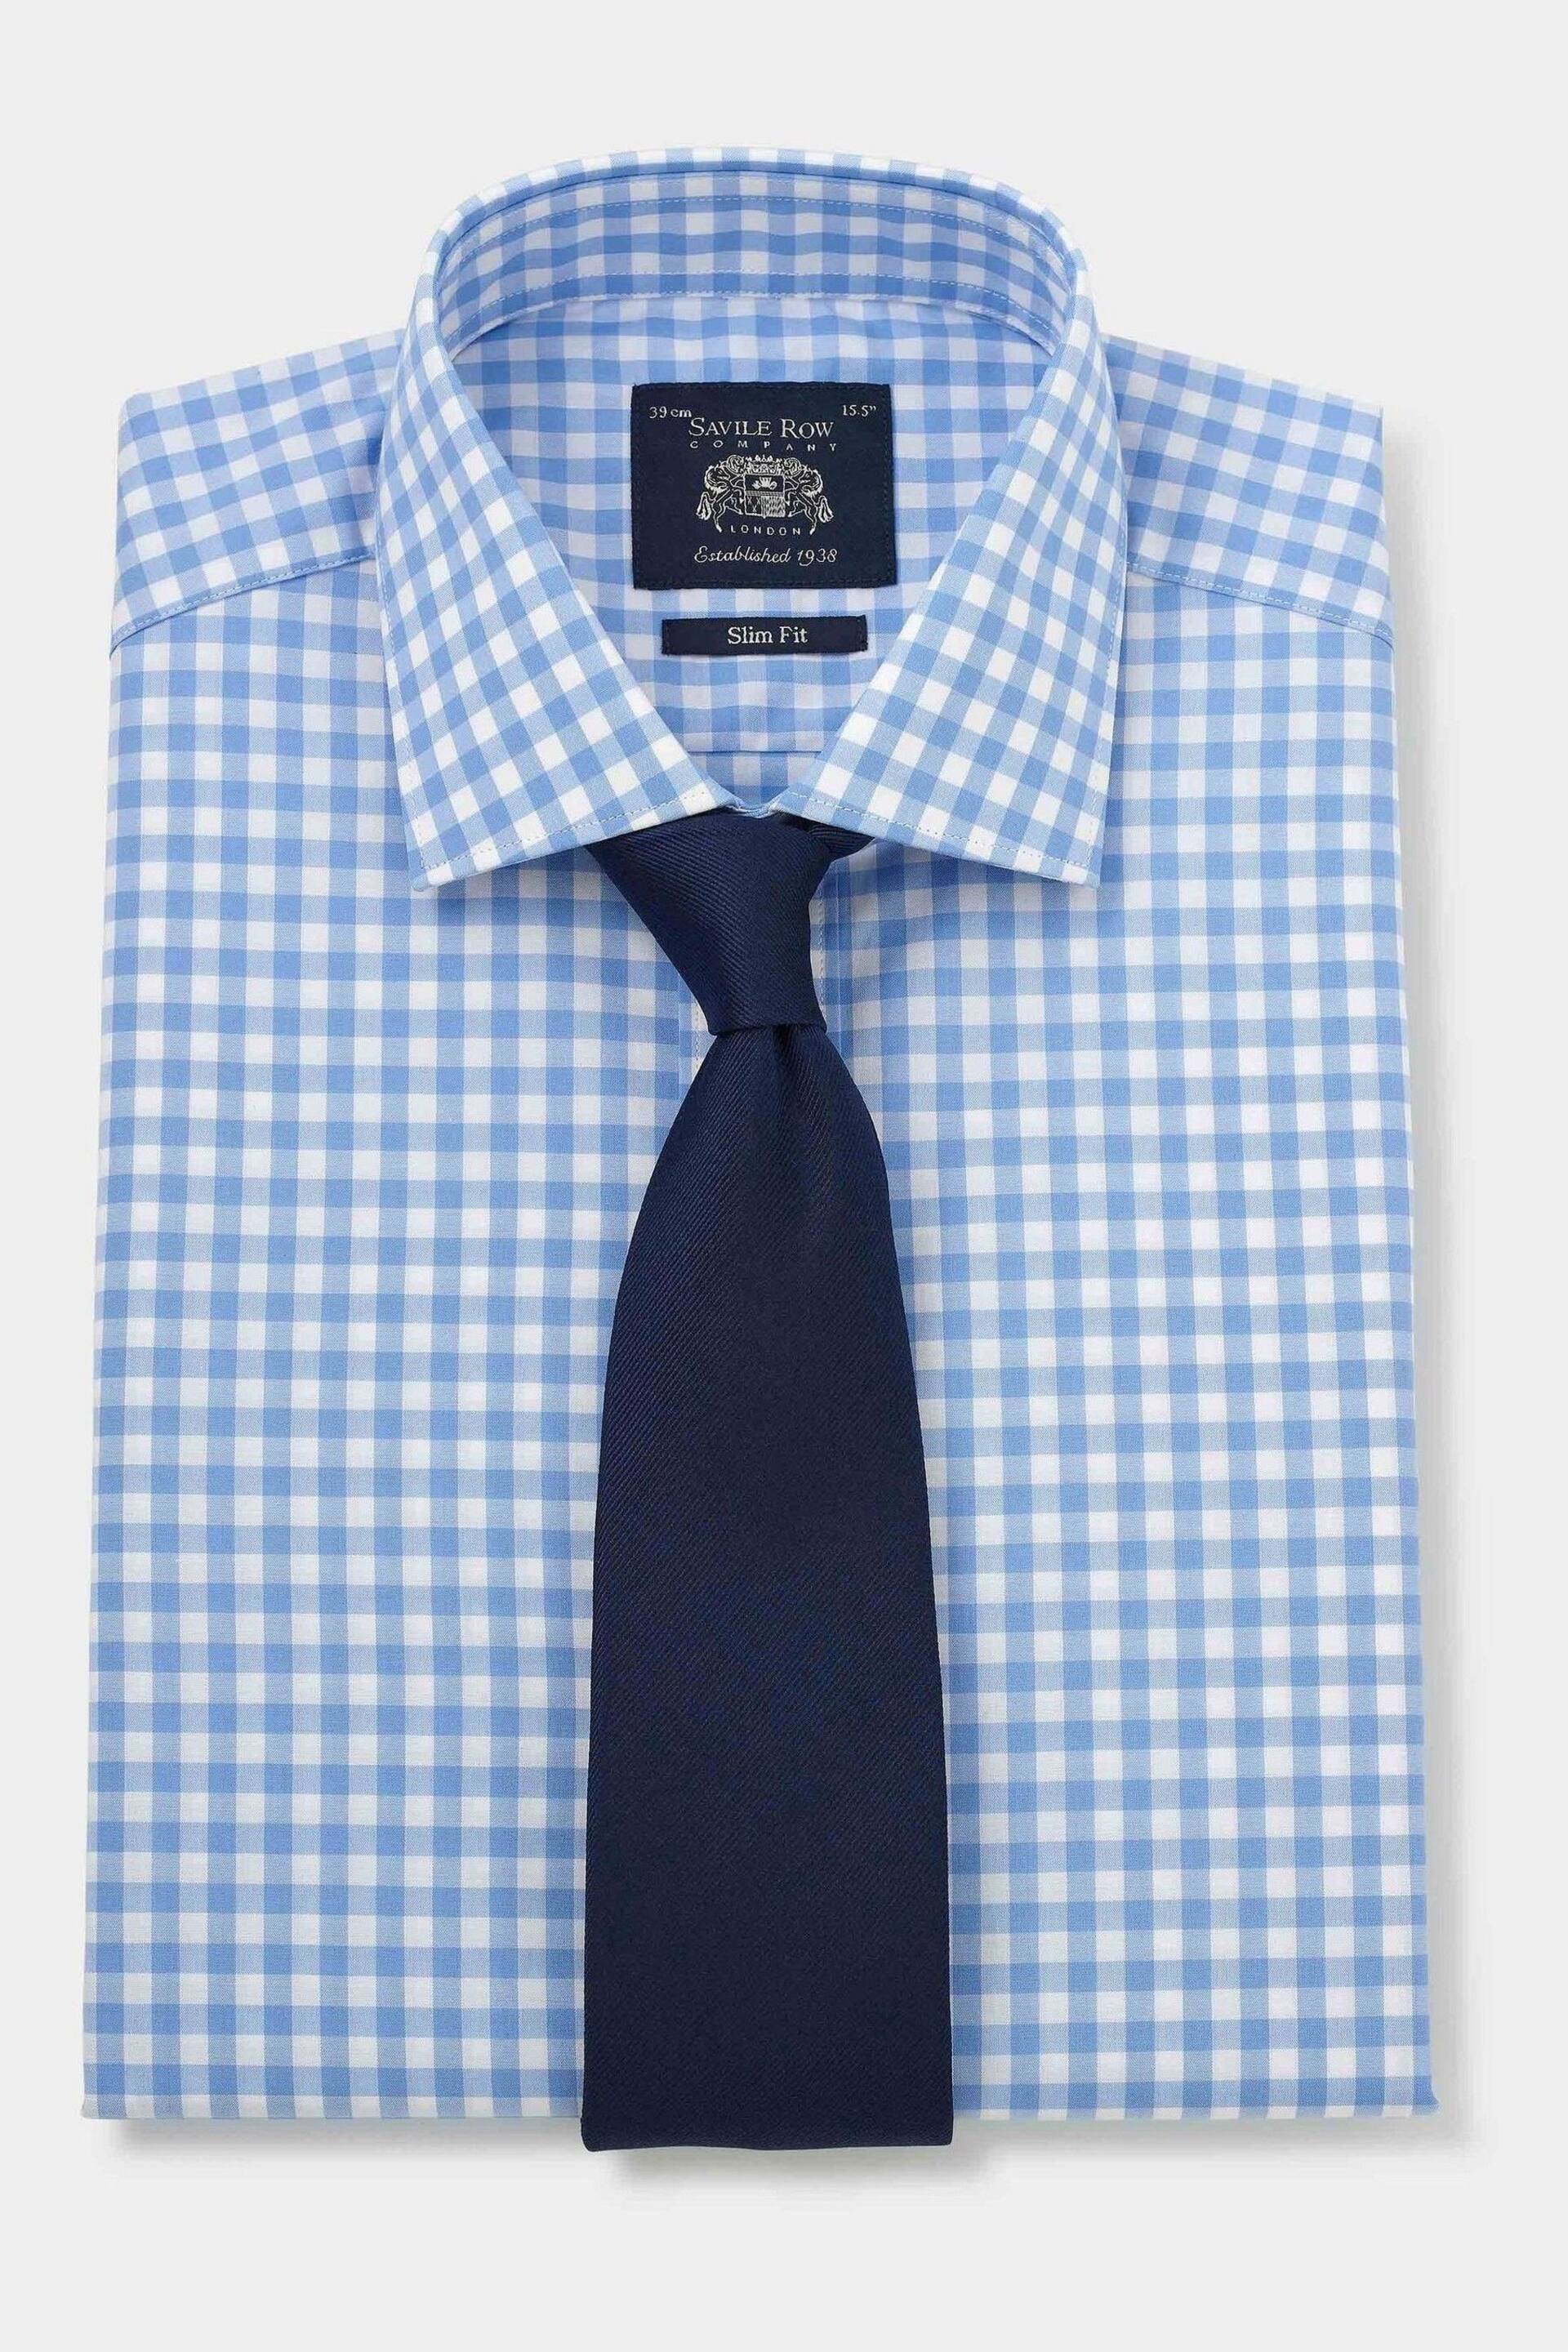 The Savile Row Company Slim Fit Blue Single Cuff Savile Row Check Shirt - Image 3 of 6